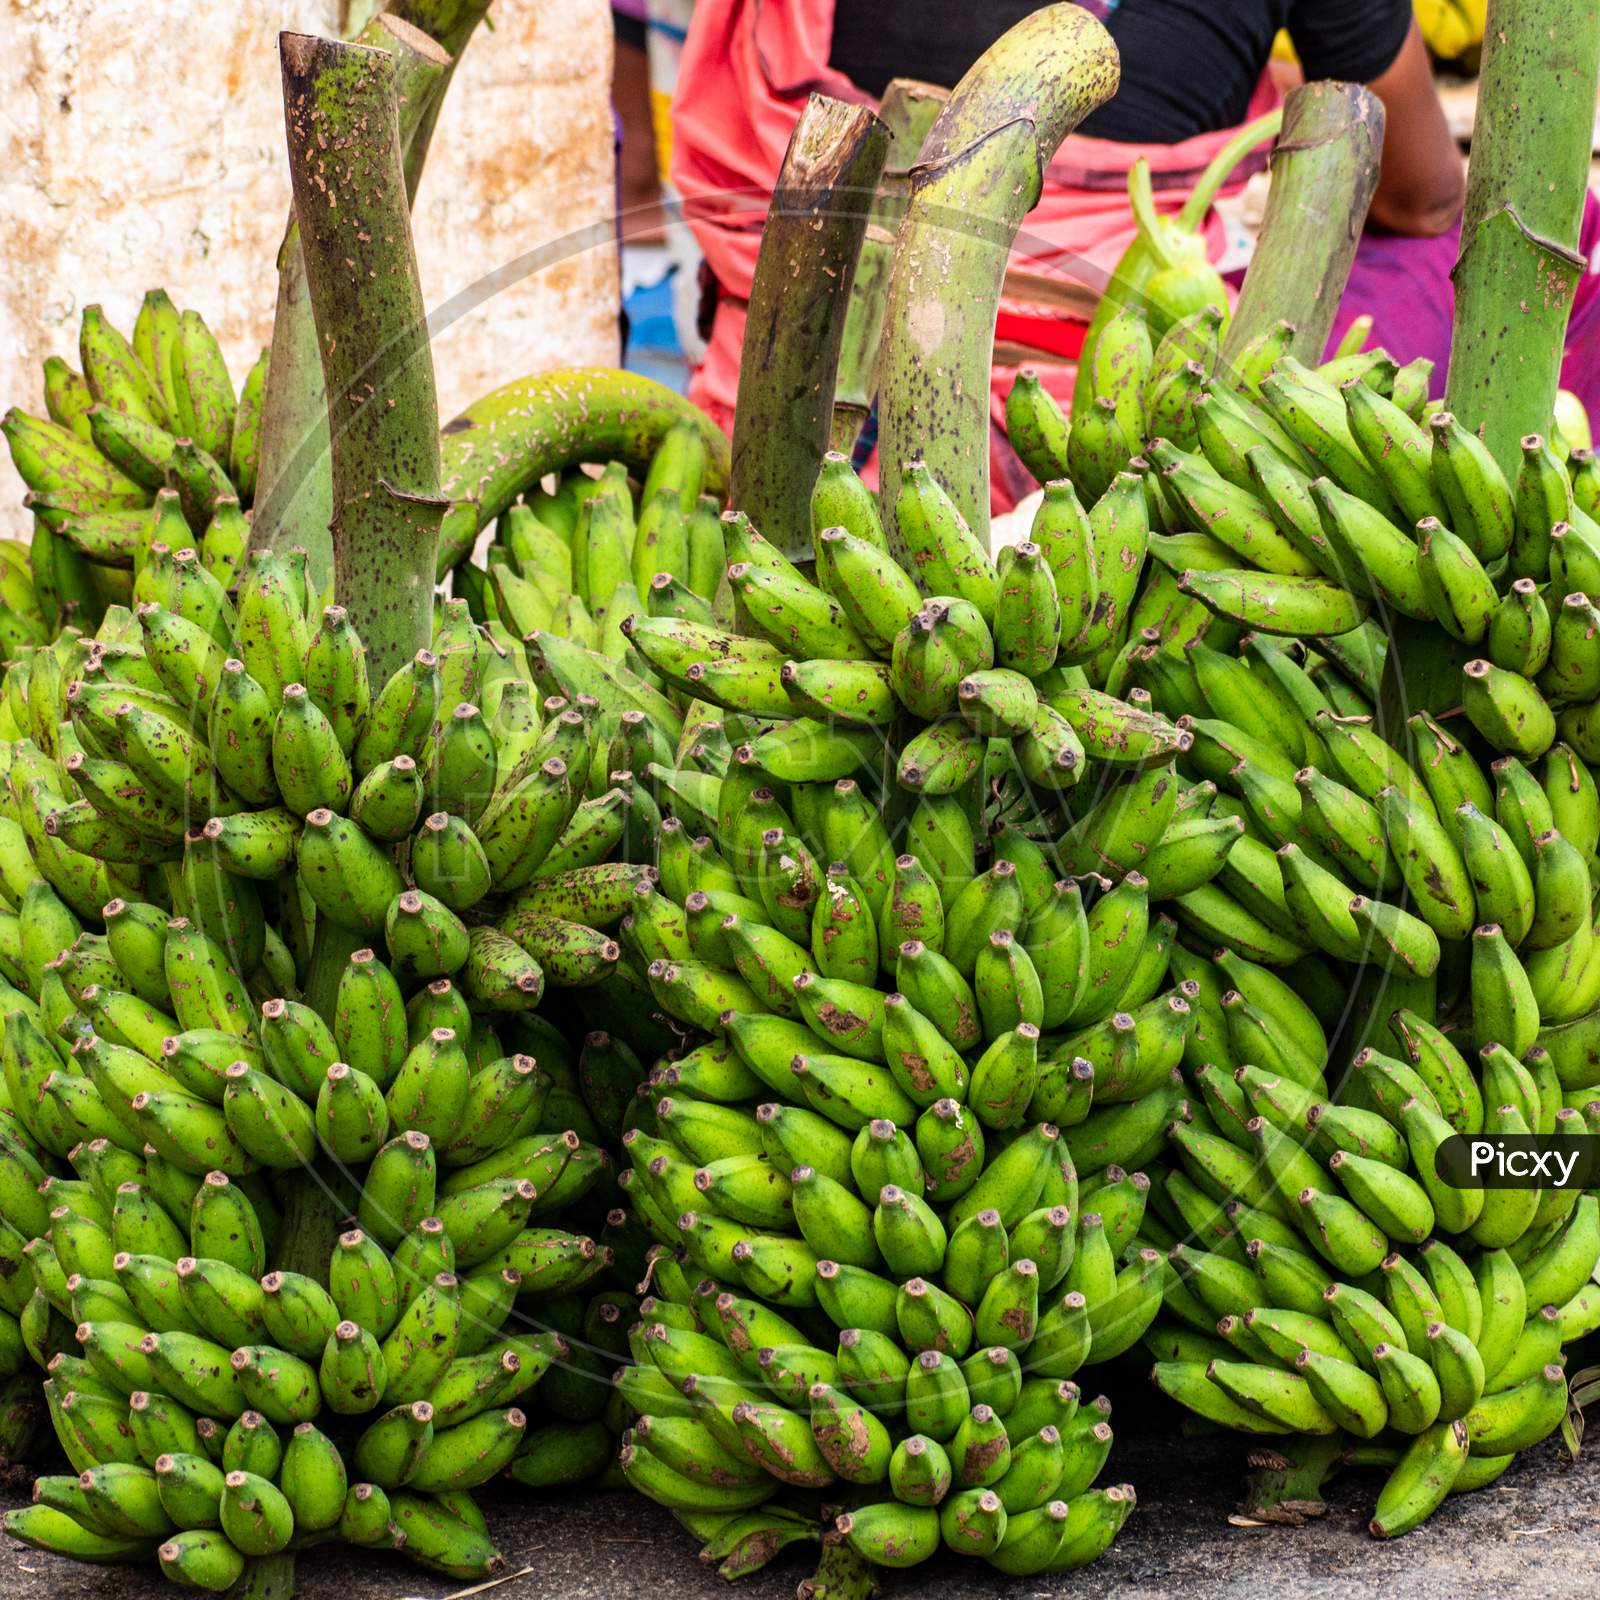 A bunch of fresh organic & tasty Bananas